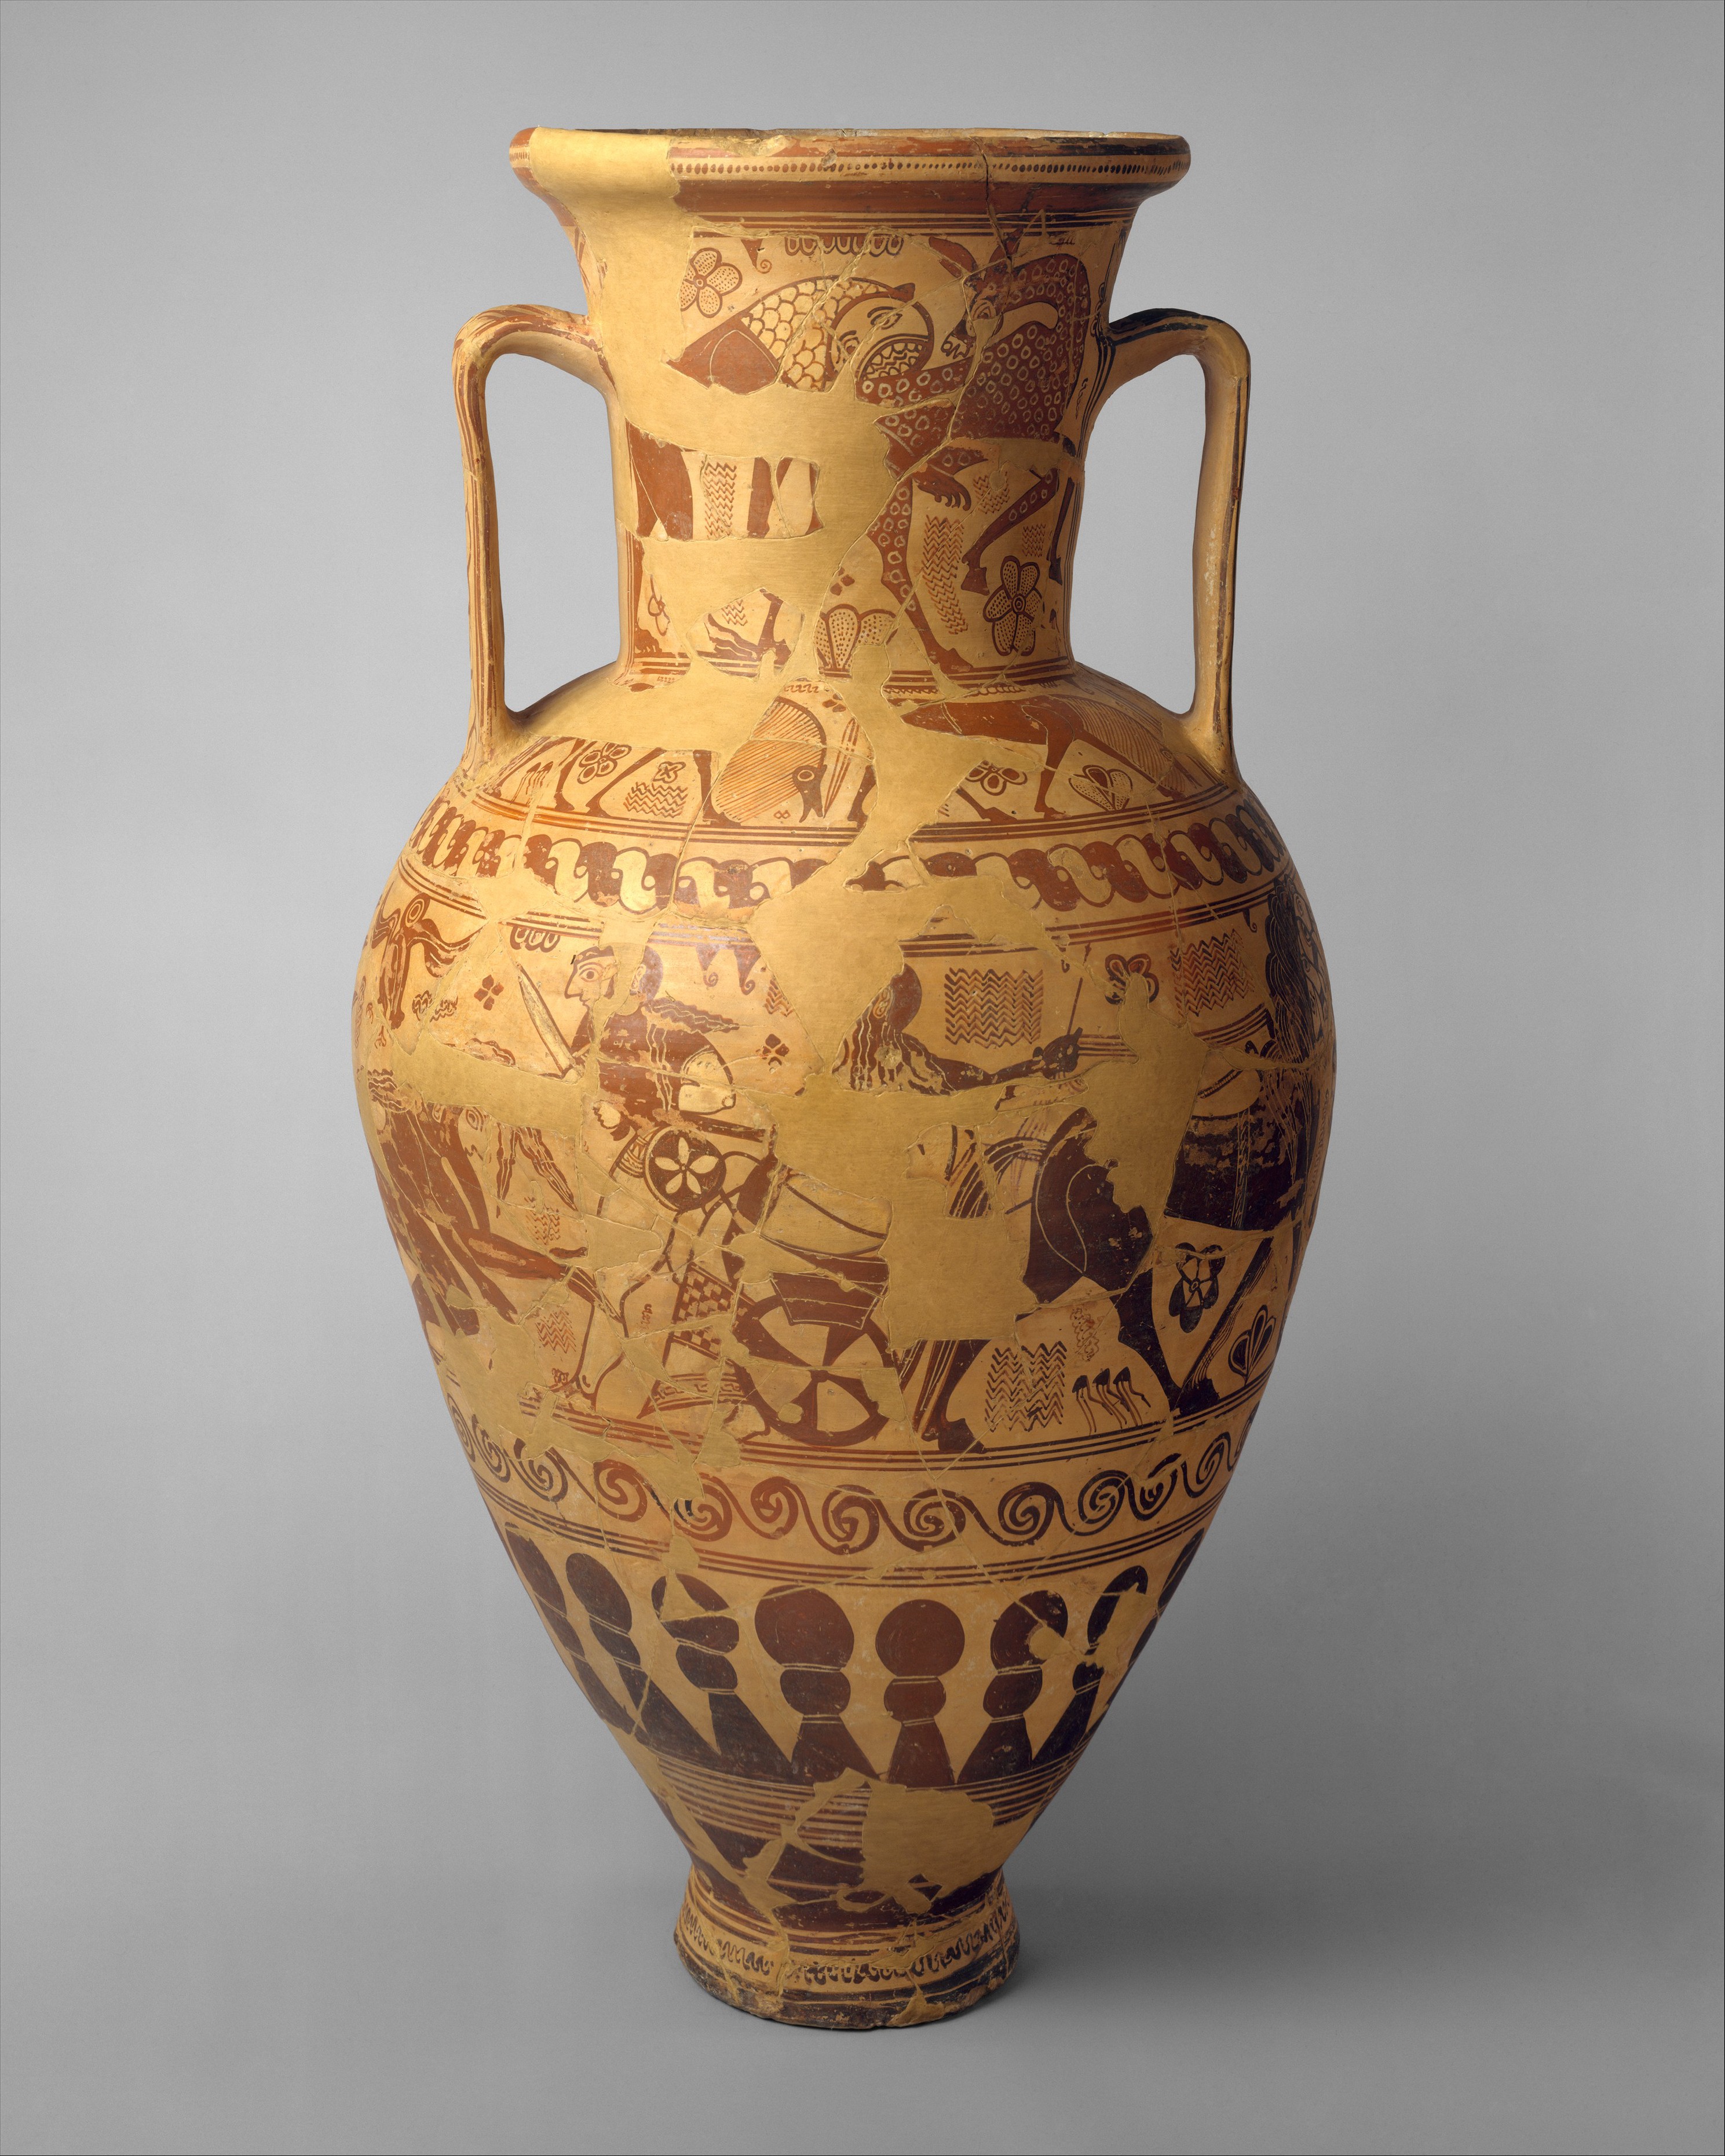 Attributed to the New Art | of Terracotta | Painter | neck-amphora | Attic jar) Proto-Attic Nessos York Metropolitan Museum The (storage Greek